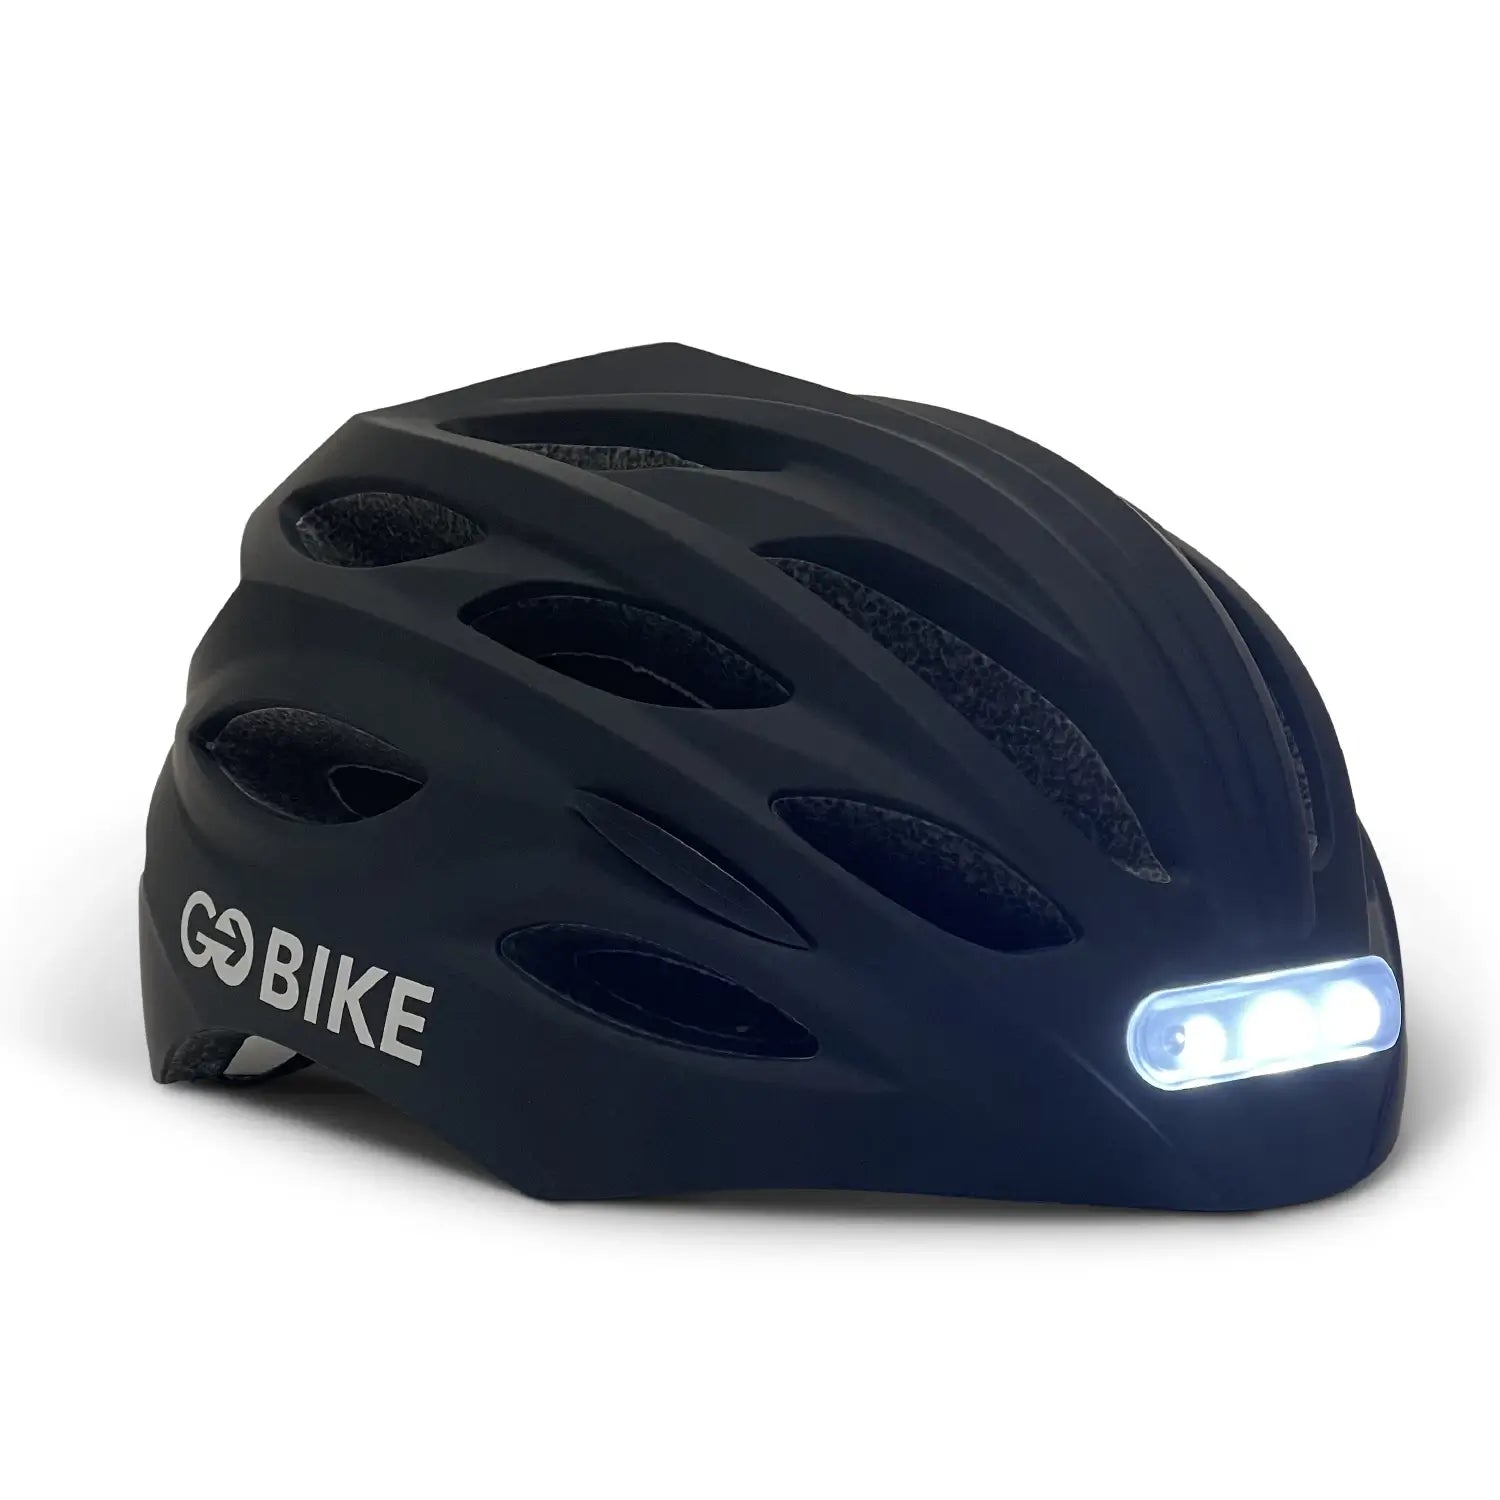 GOBIKE Helmet With Safety Warning Light_2